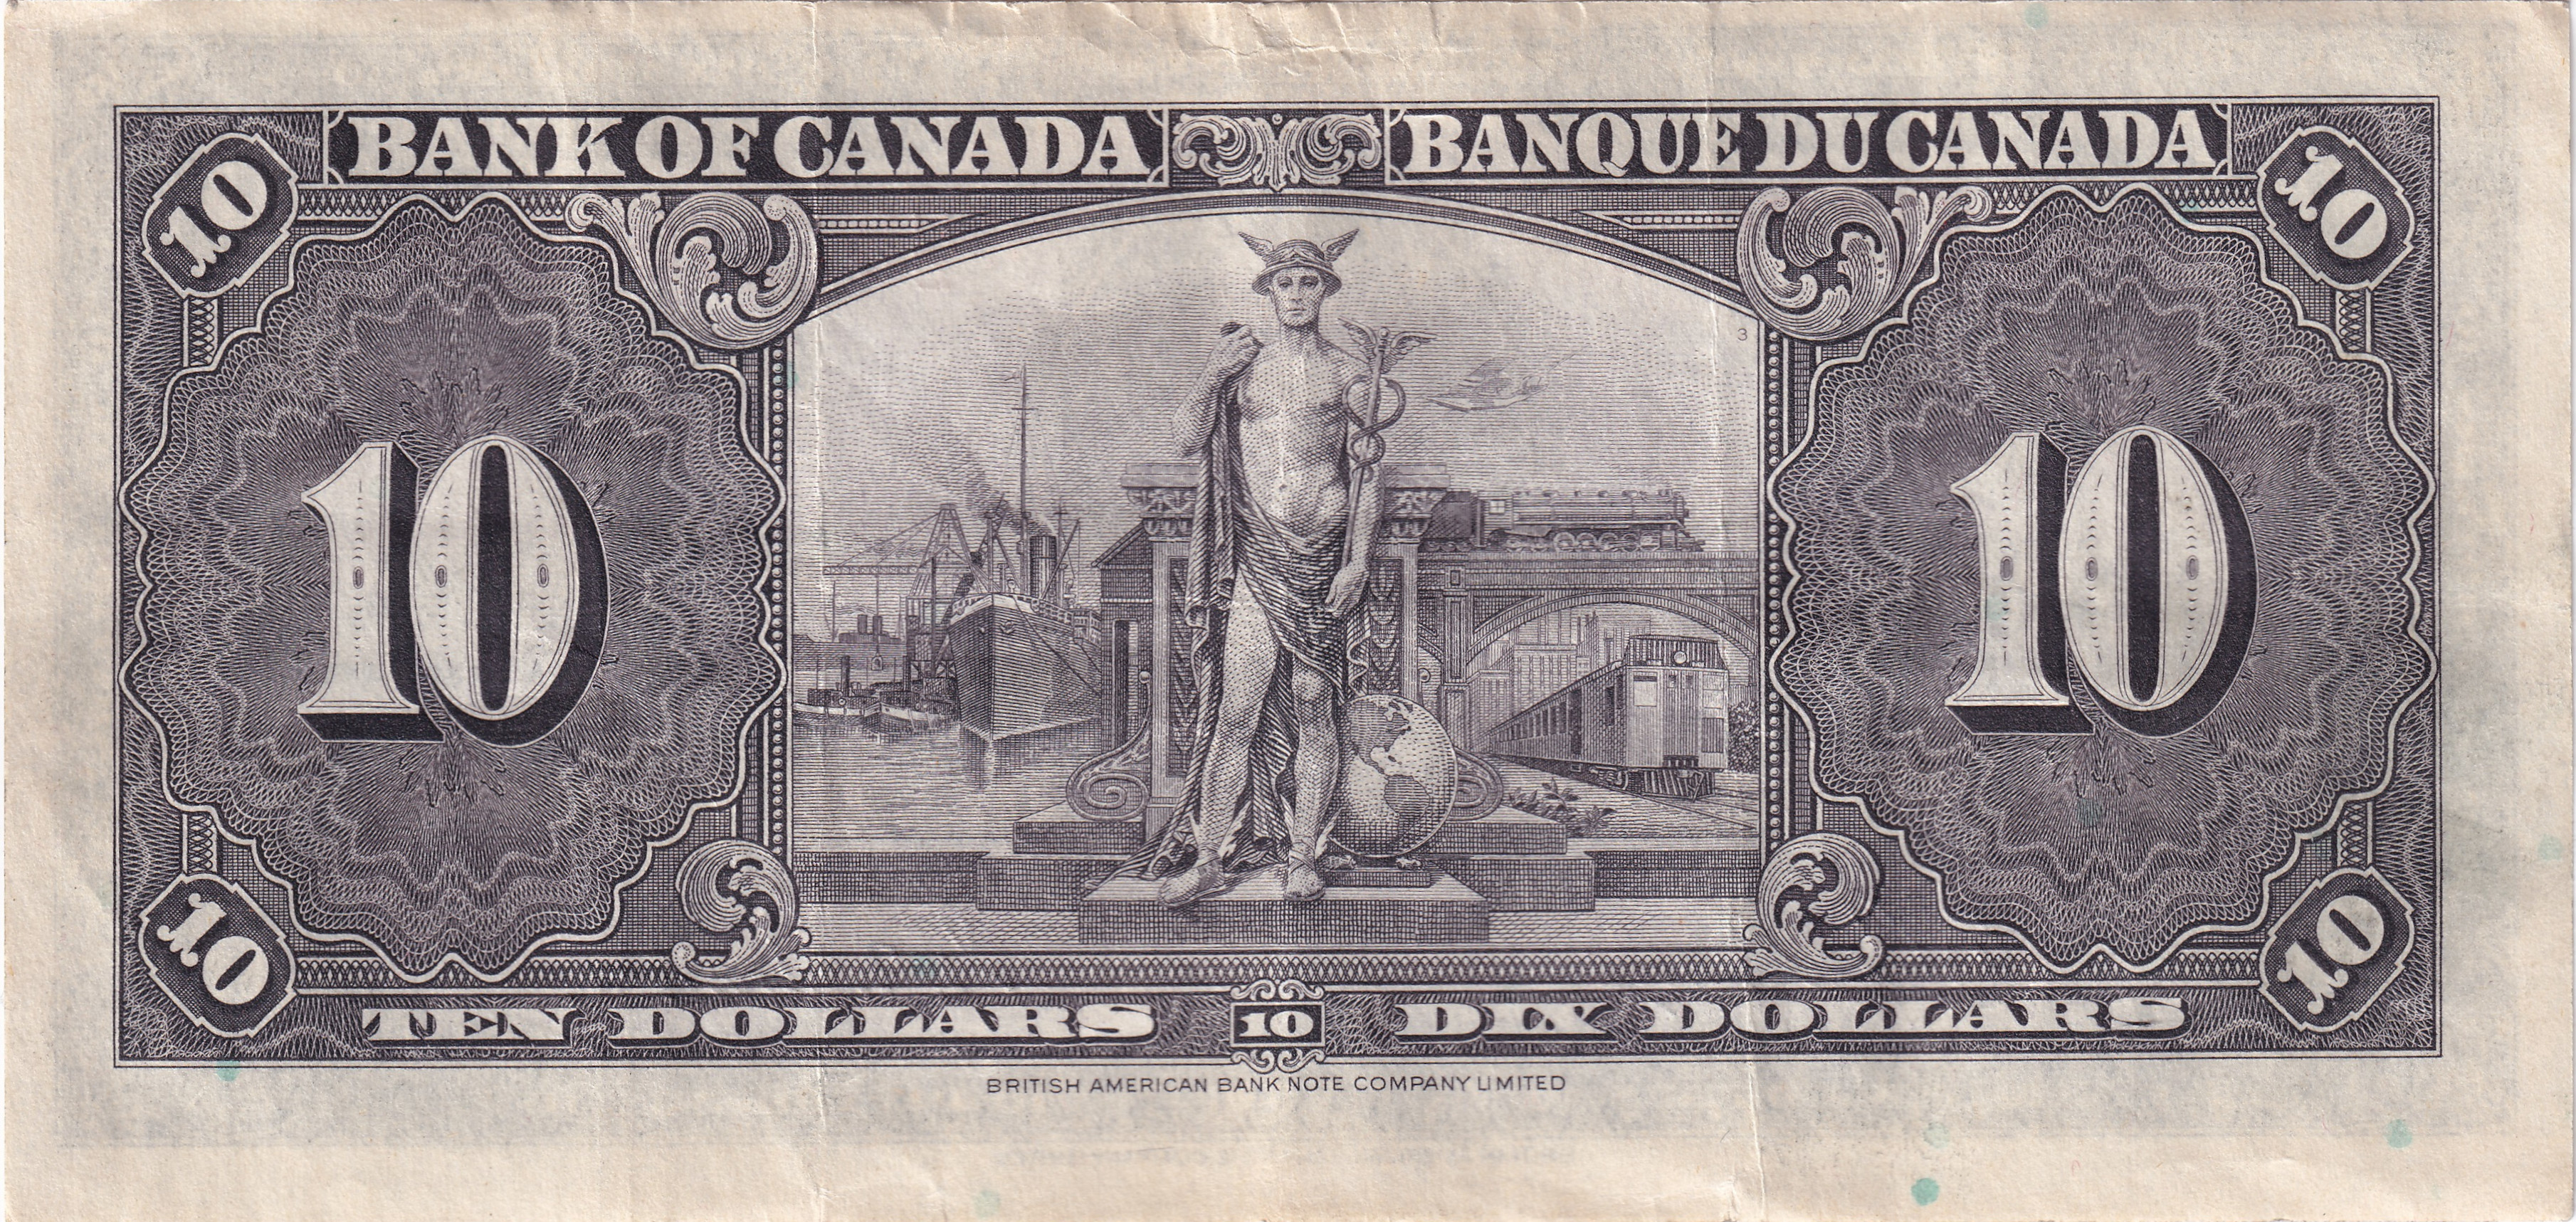 10 dollars - Série 1937 - George VI